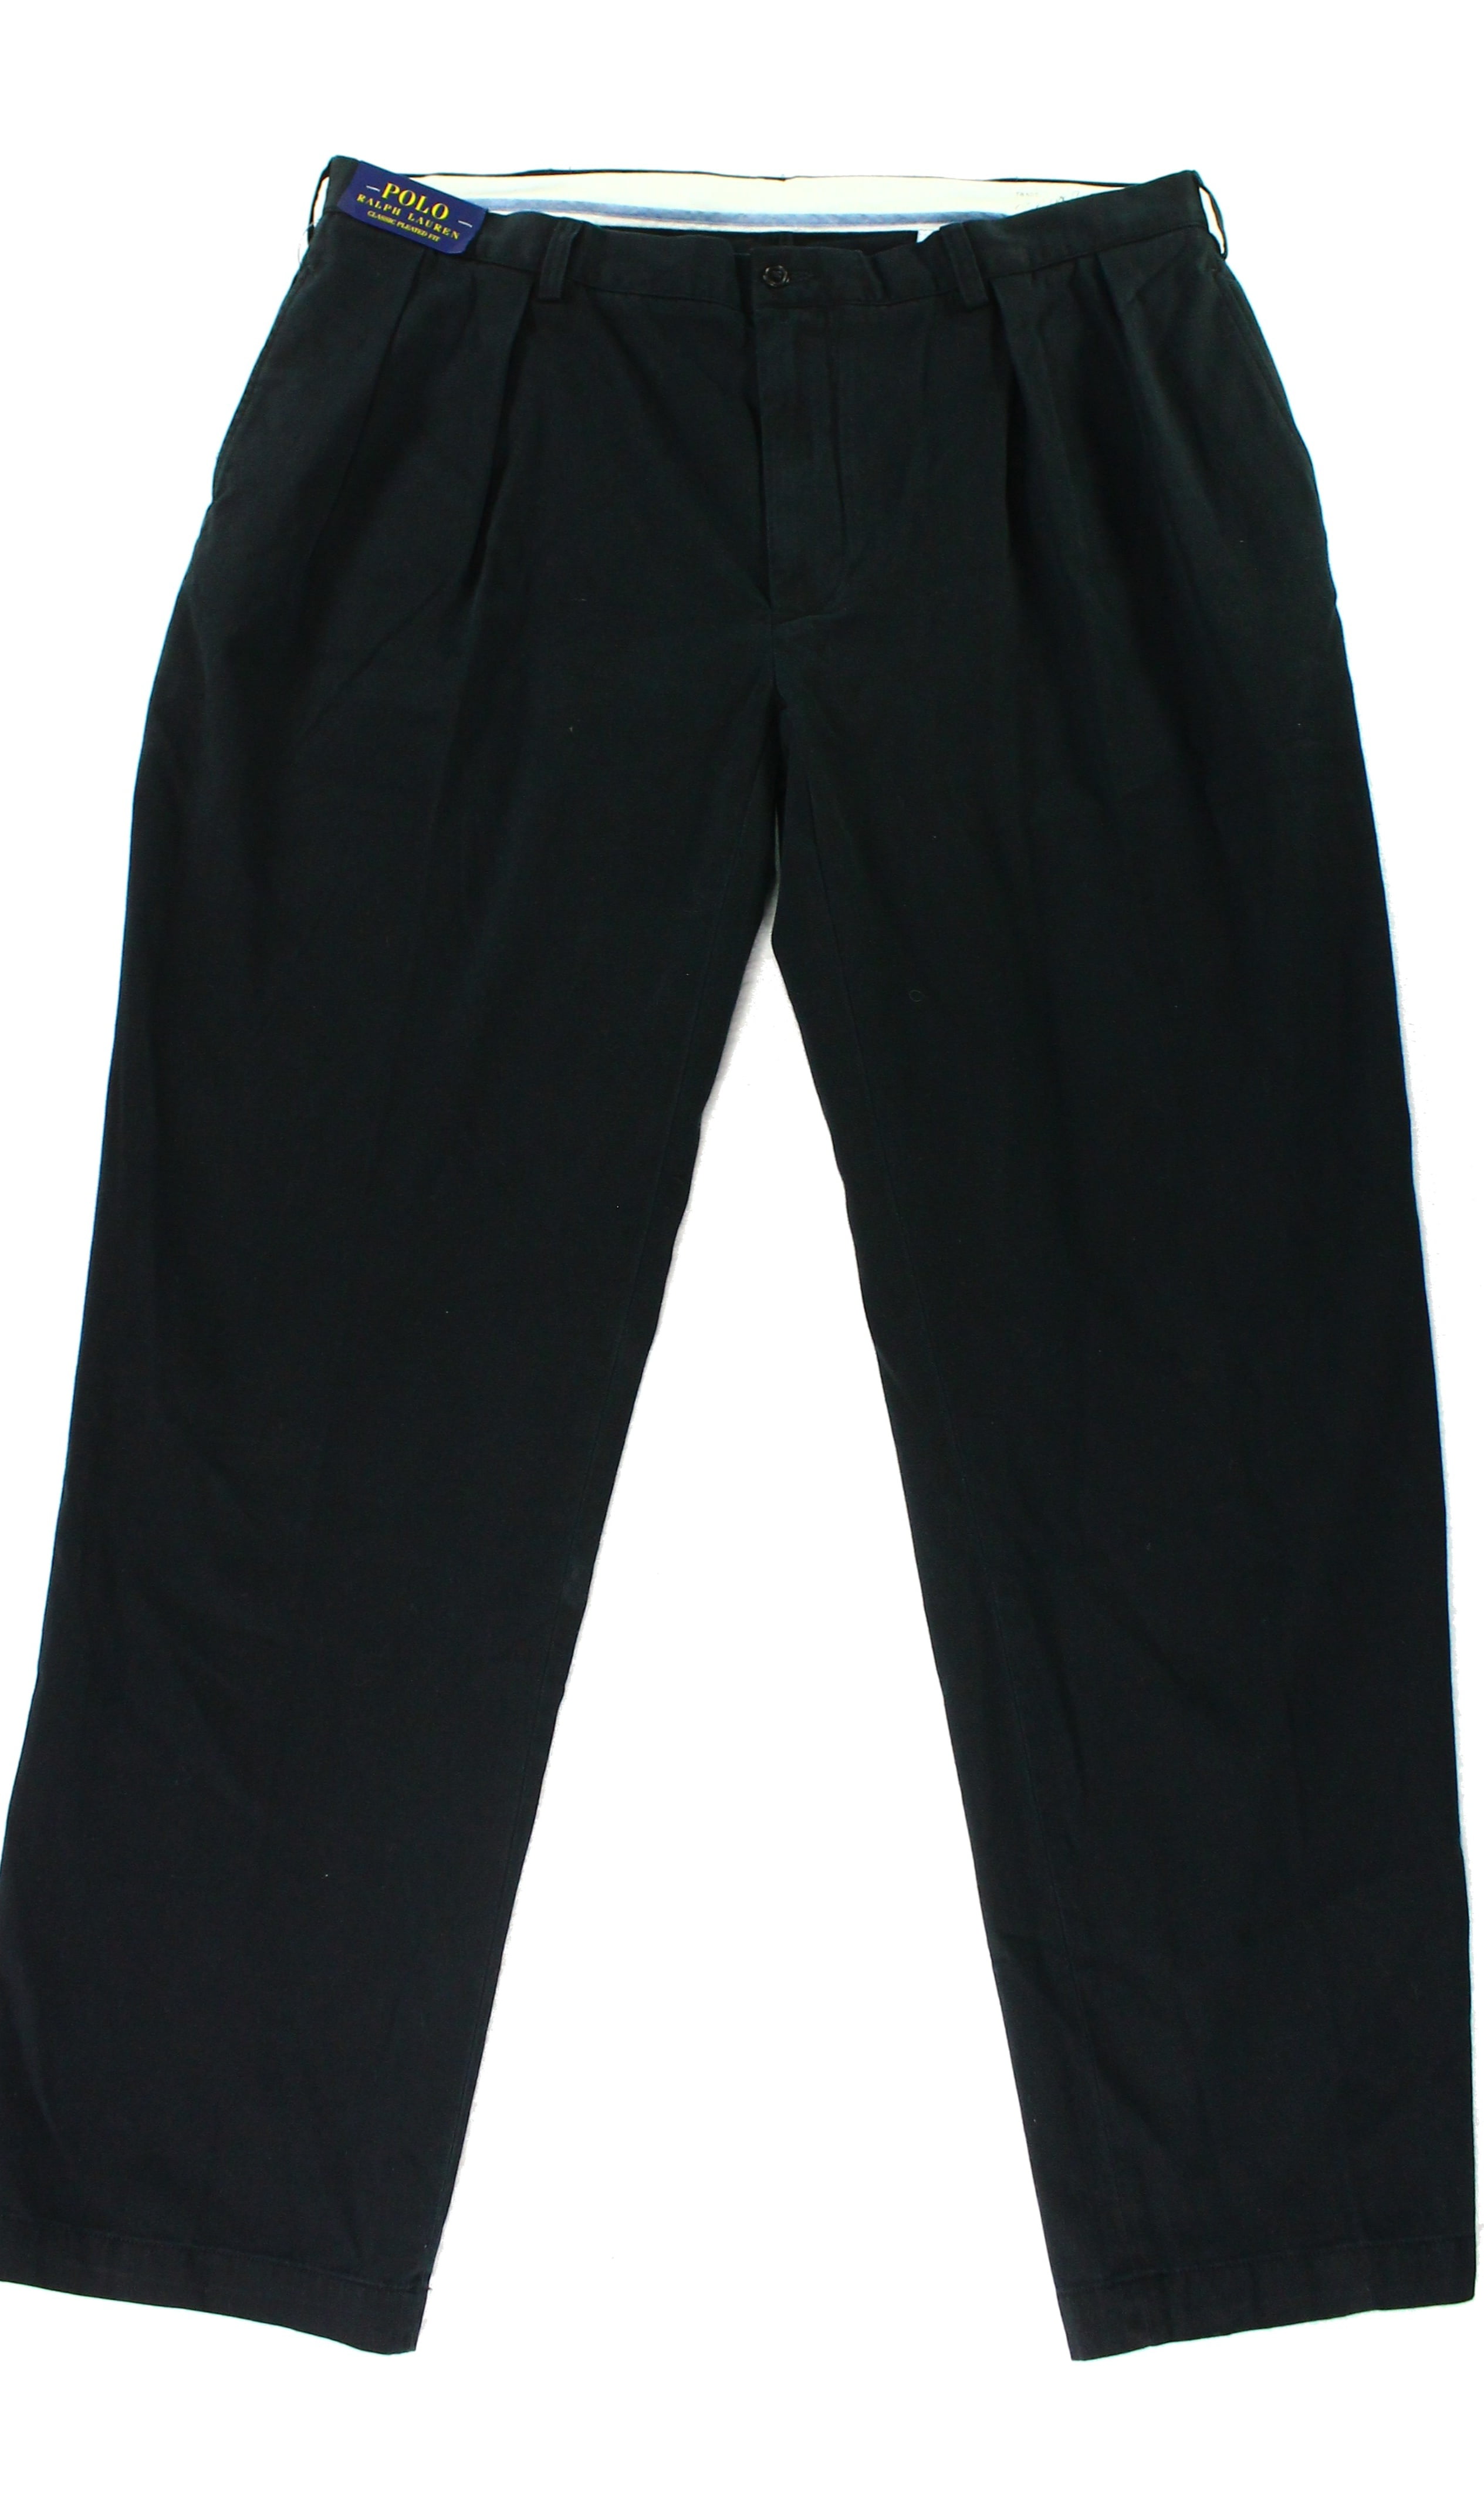 Polo Ralph Lauren - Polo Ralph Lauren NEW Black Mens Size 34X29 Khakis ...